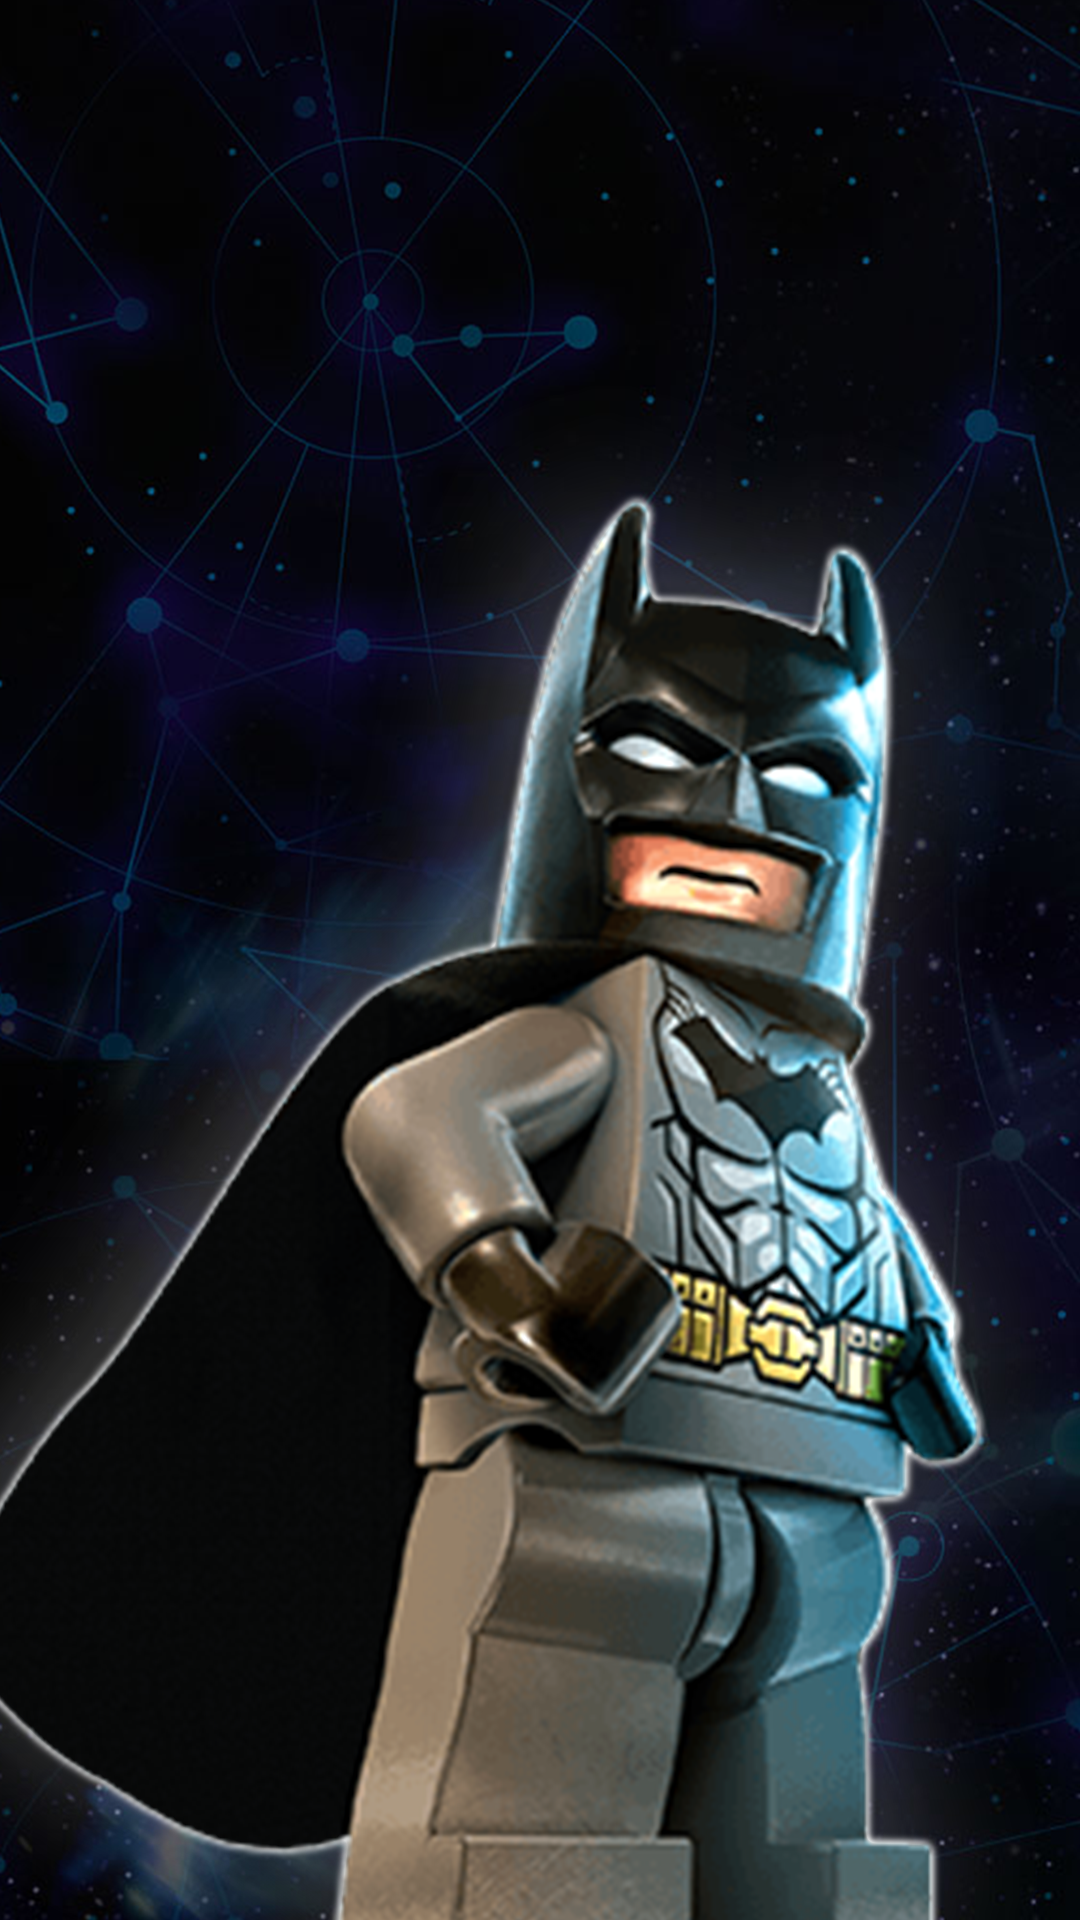 lego batman wallpaper,batman,fictional character,superhero,justice league,action figure